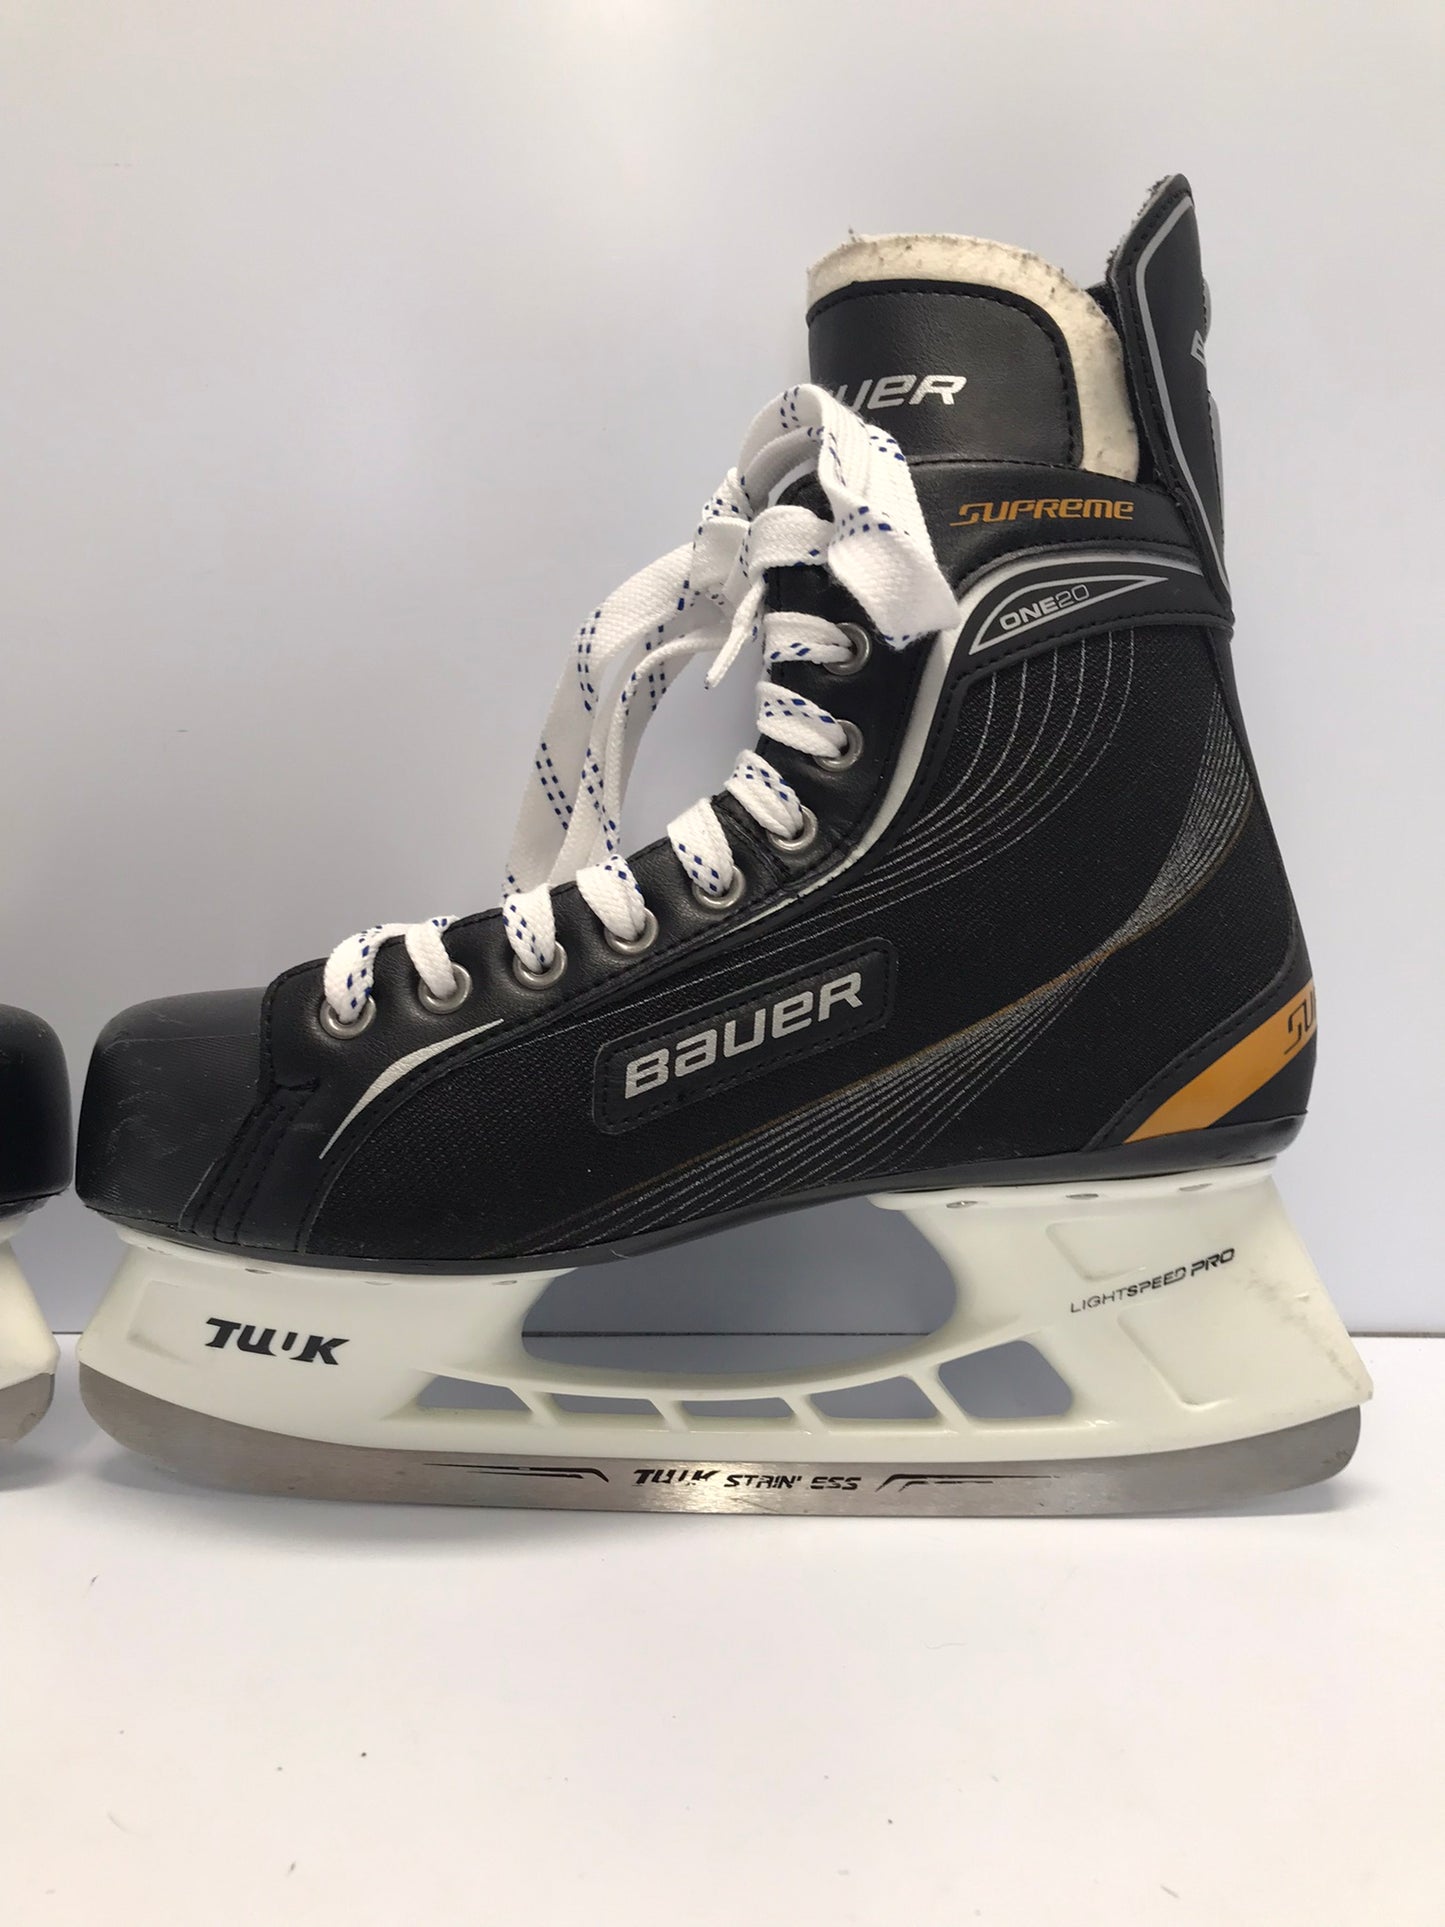 Hockey Skates Men's Size 10.5 Shoe 9 Skate Size Bauer Supreme Like New